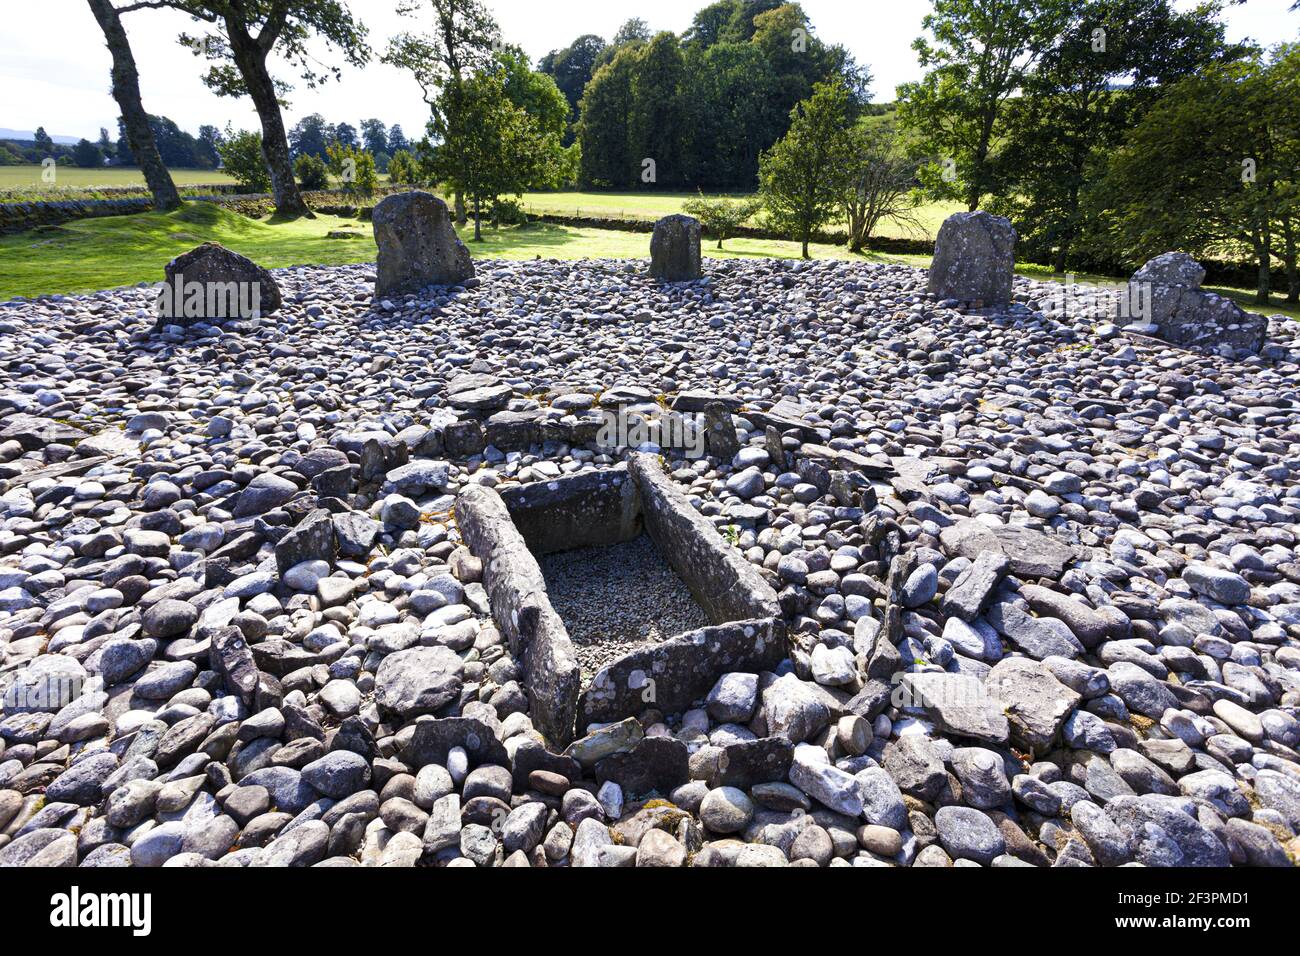 Temple Wood Stone Circle dating from c.3000BC in Kilmartin Glen, Argyll & Bute, Scotland UK Stock Photo